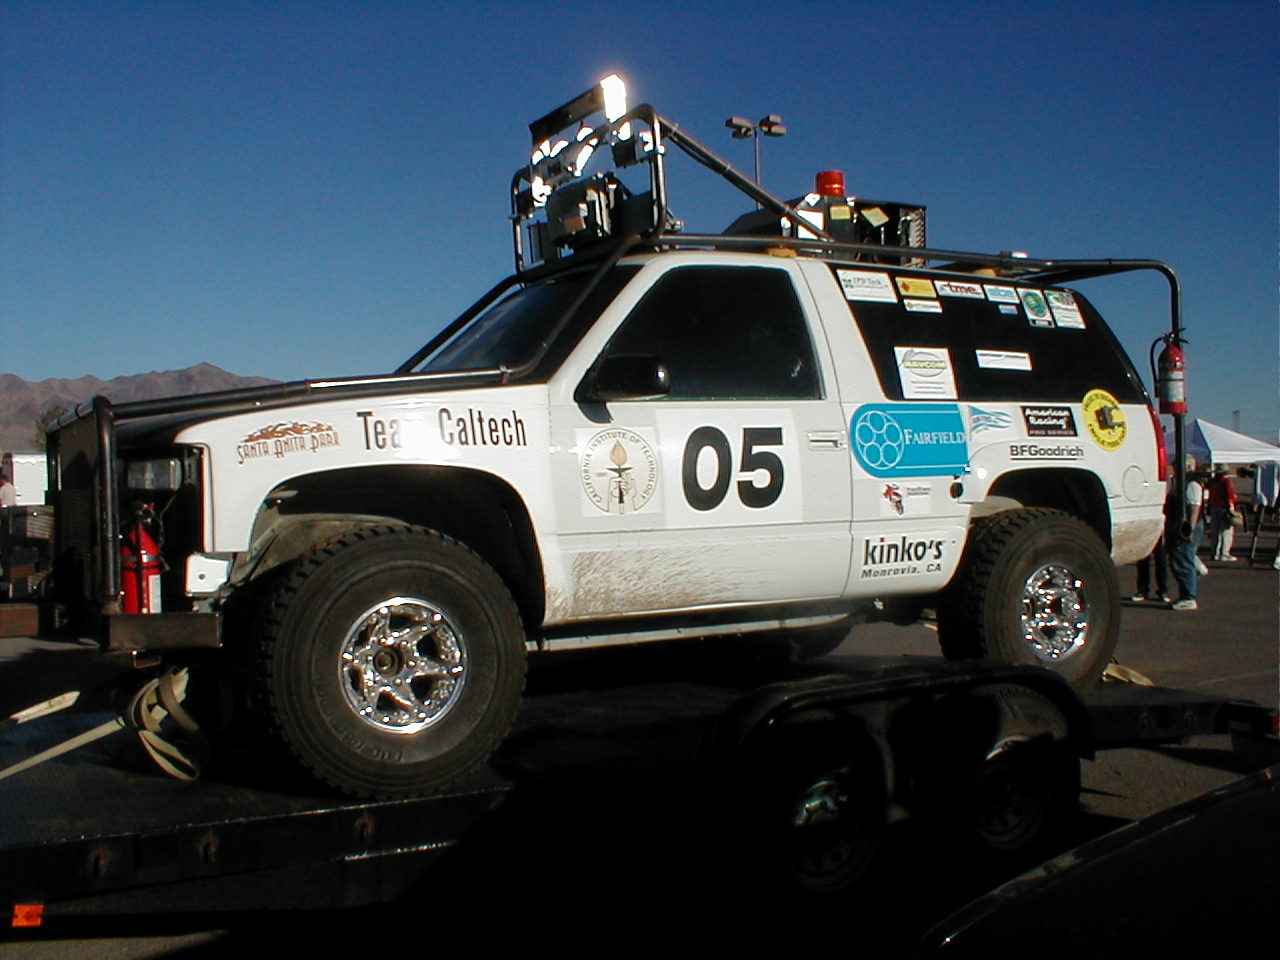 Team CalTech's vehicle